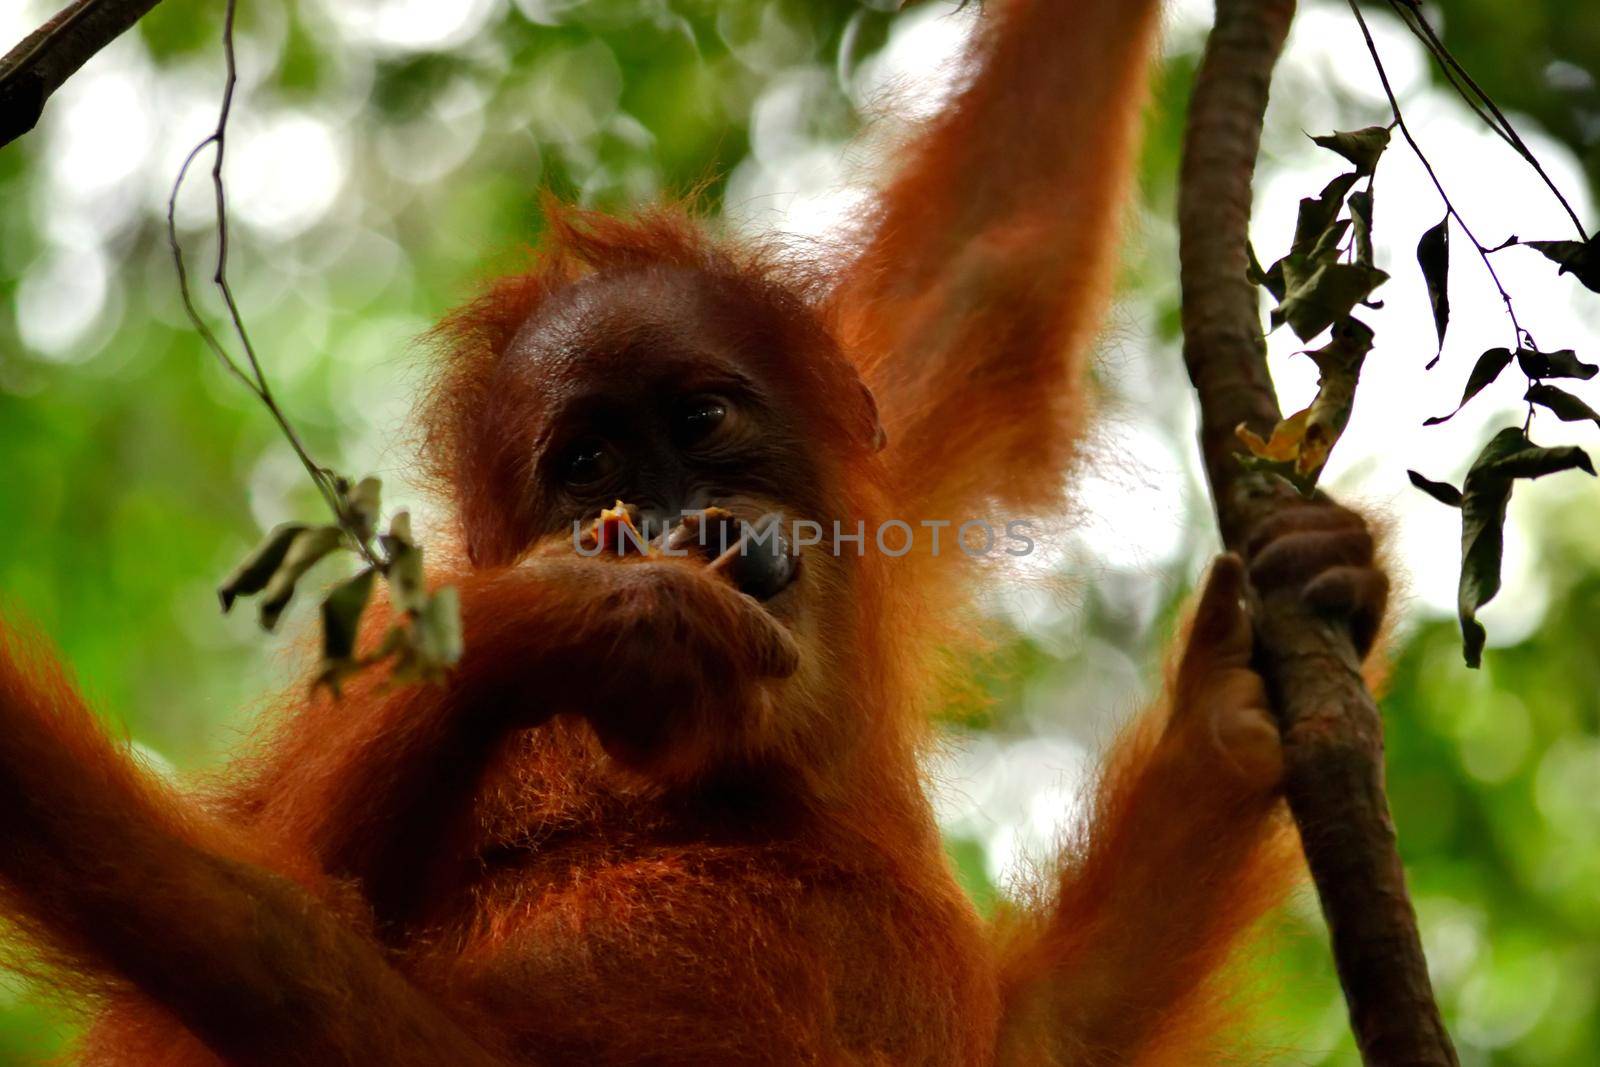 Sumatran orangutan cub in the Gunung Leuser National Park by silentstock639